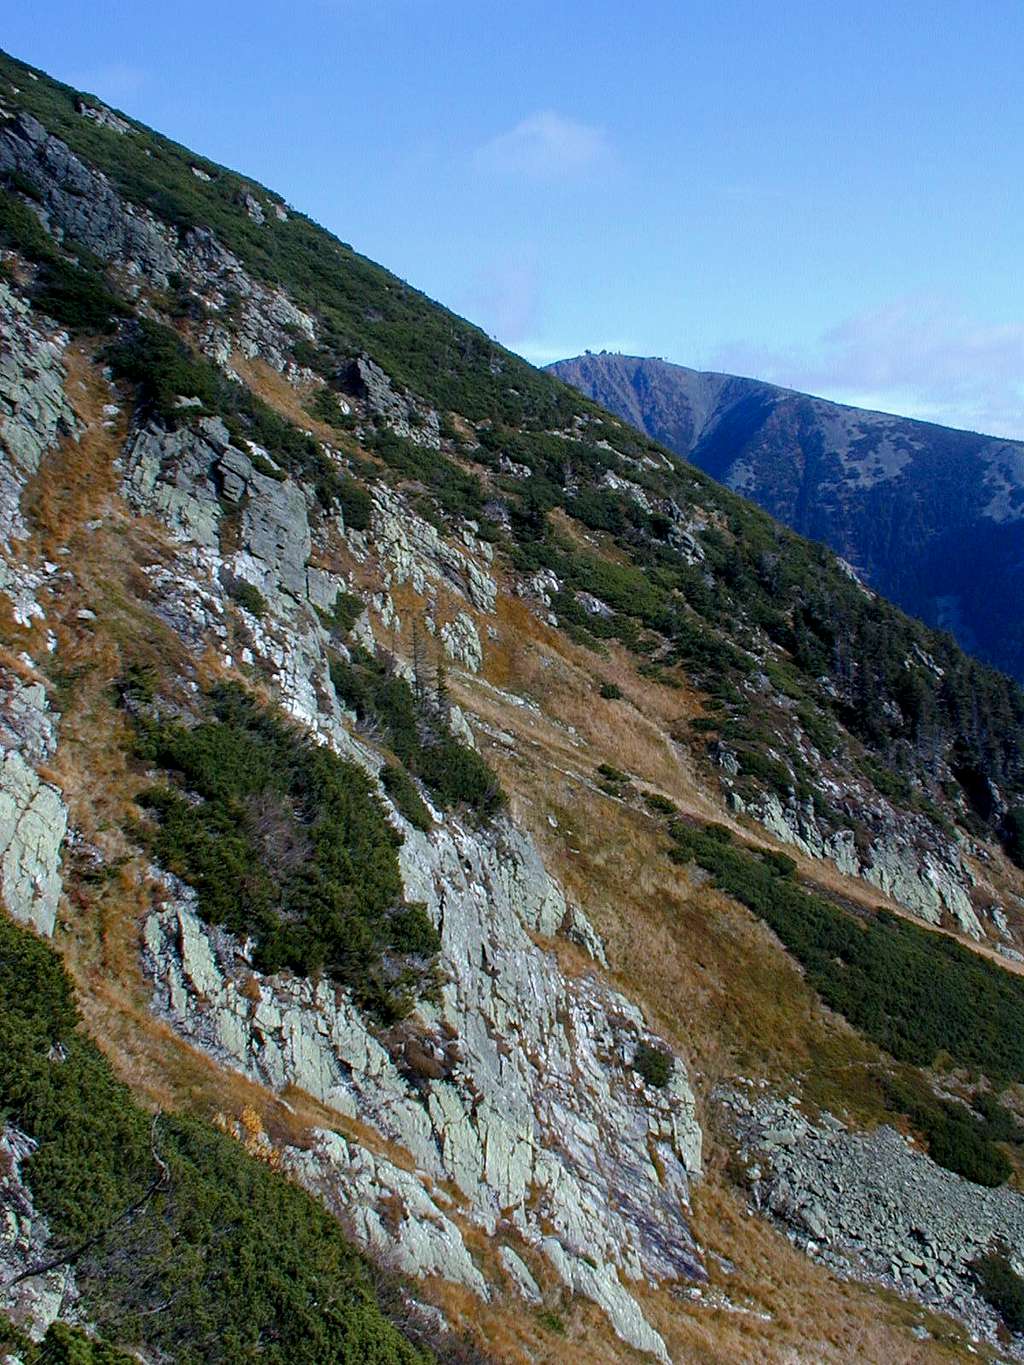 Snezka from SE slope of Studnicni hora